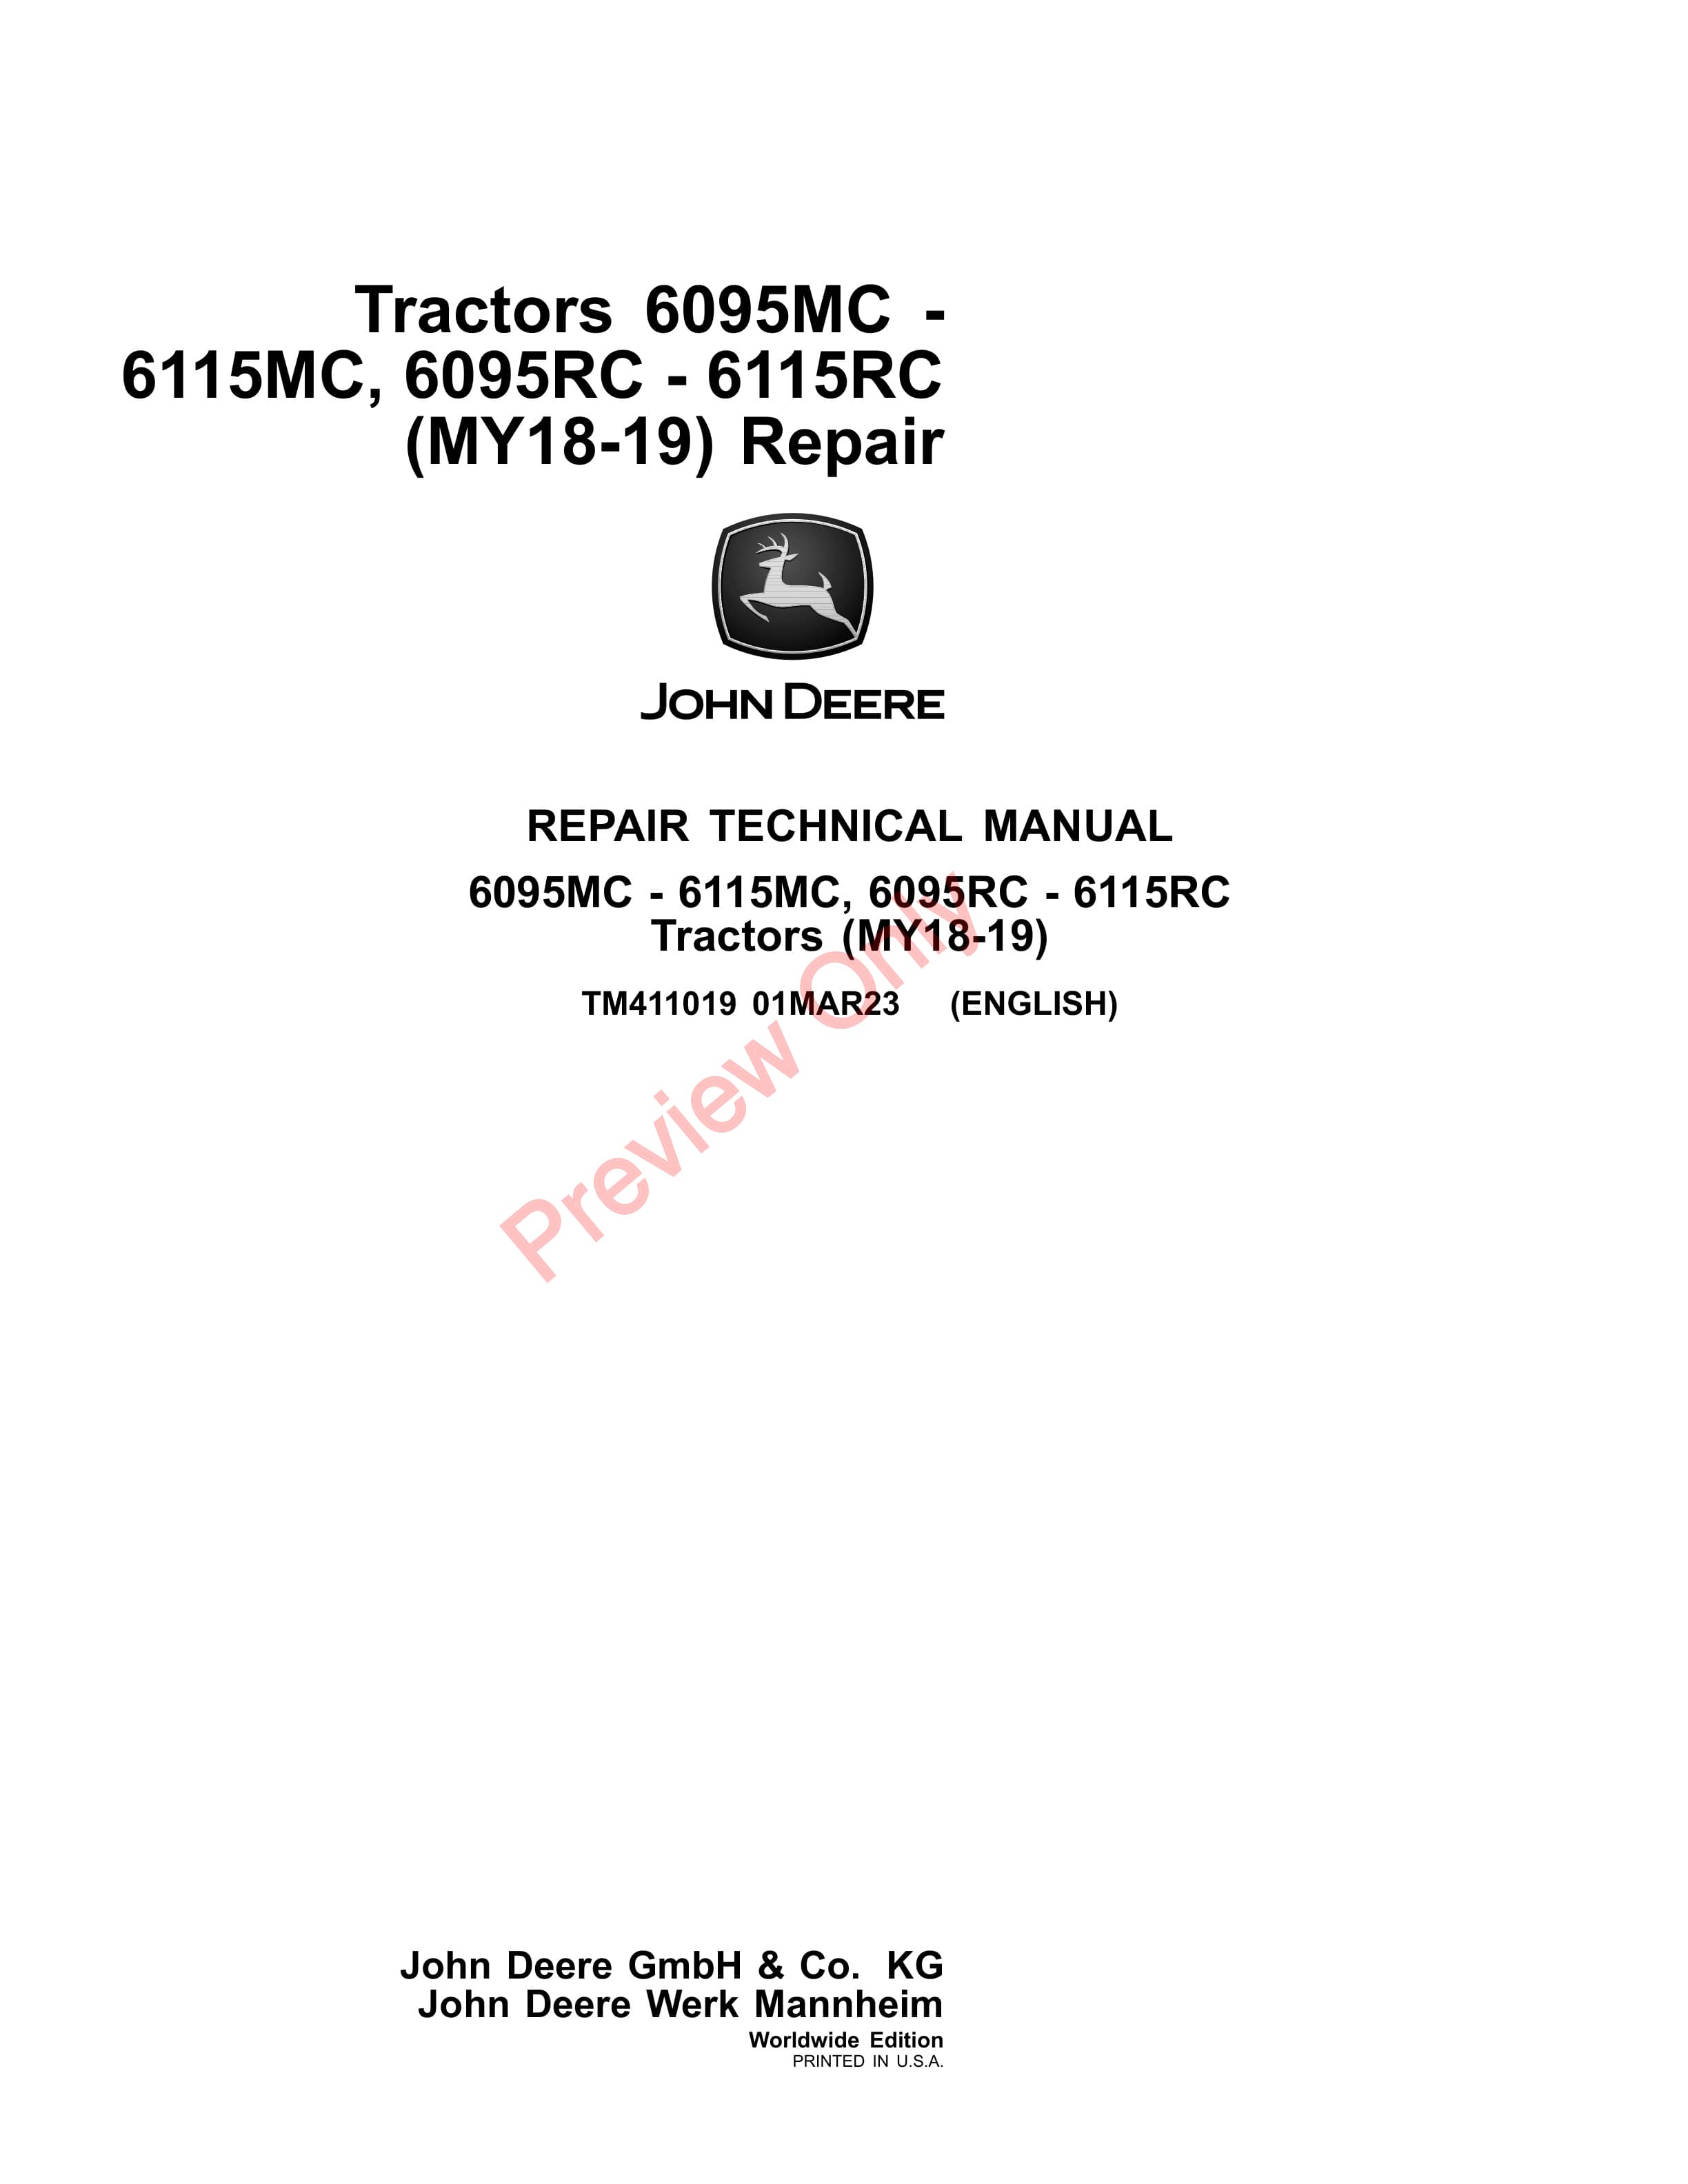 John Deere Tractors 6095MC 6115MC 6095RC 6115RC MY18 19 Repair Technical Manual TM411019 01MAR23 1